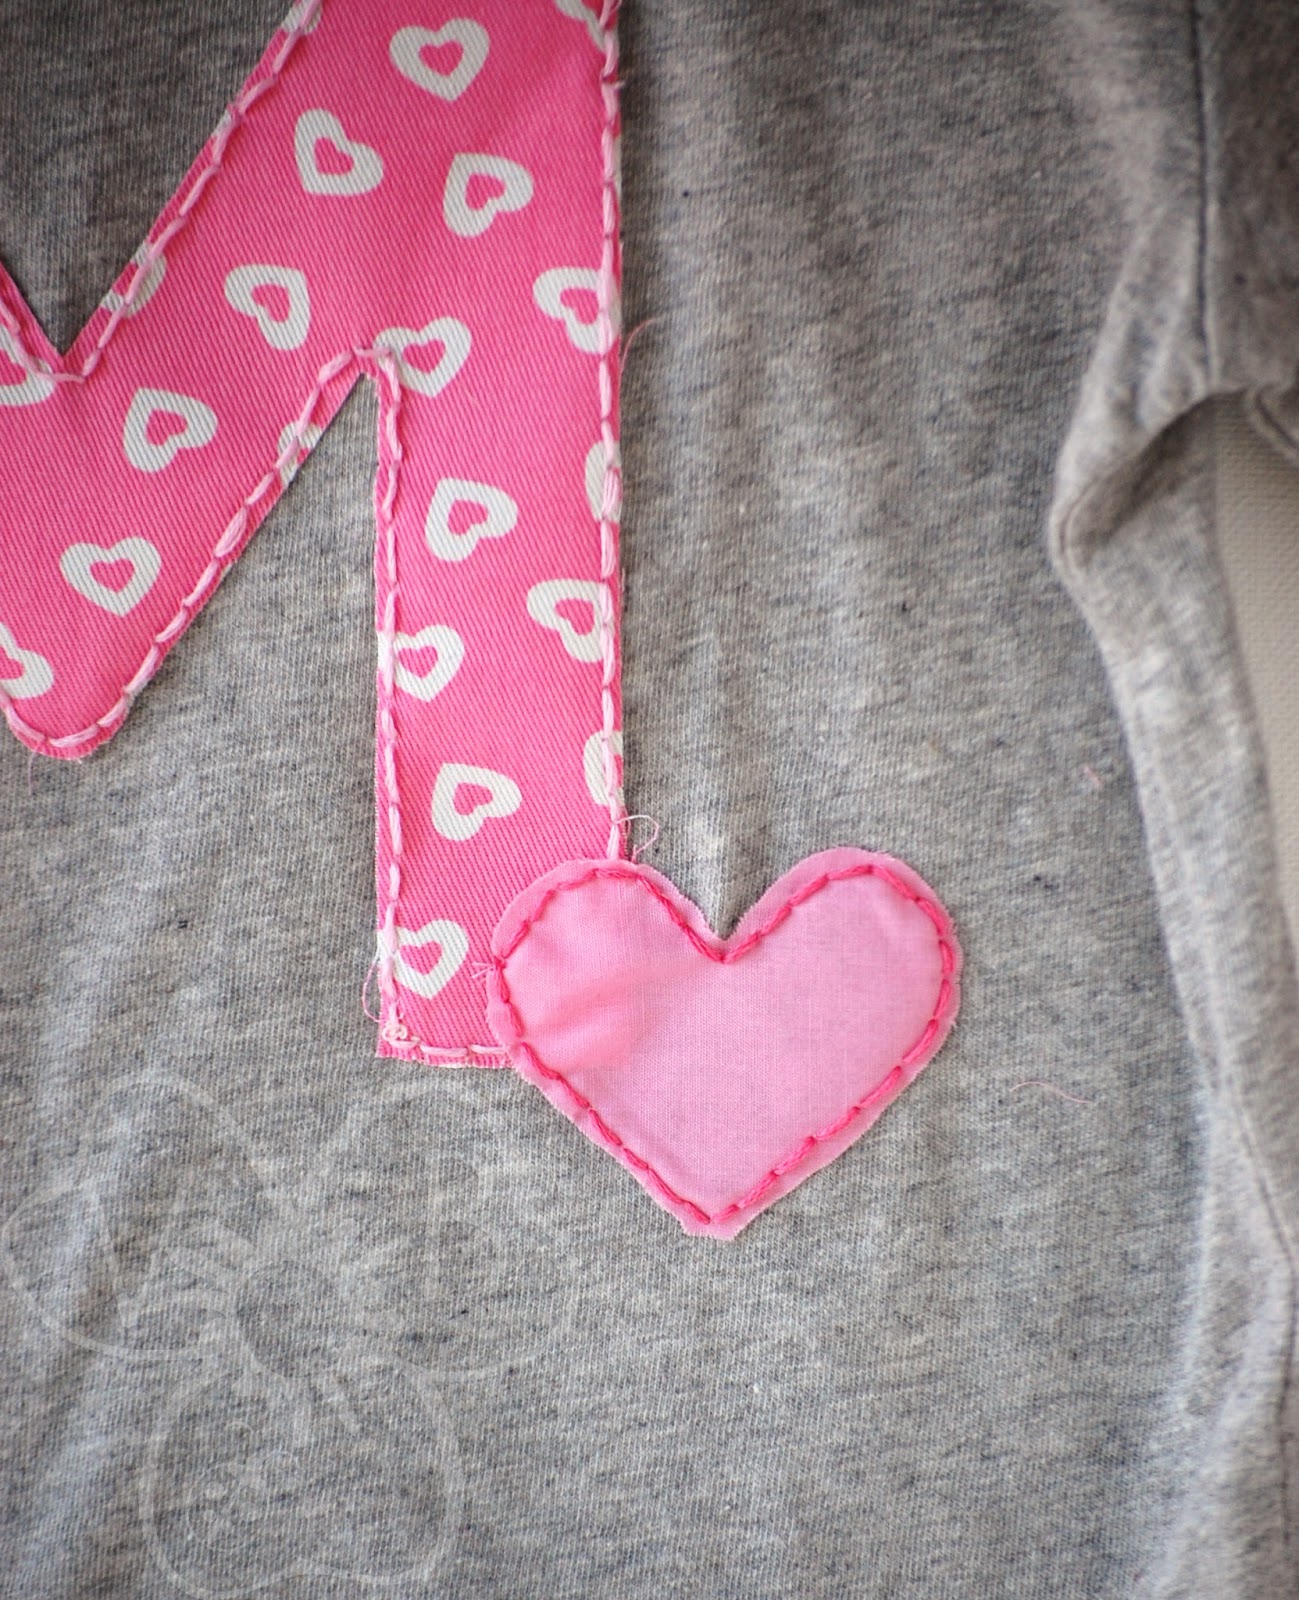 Violet's Buds: Handmade Valentine's Day Shirts